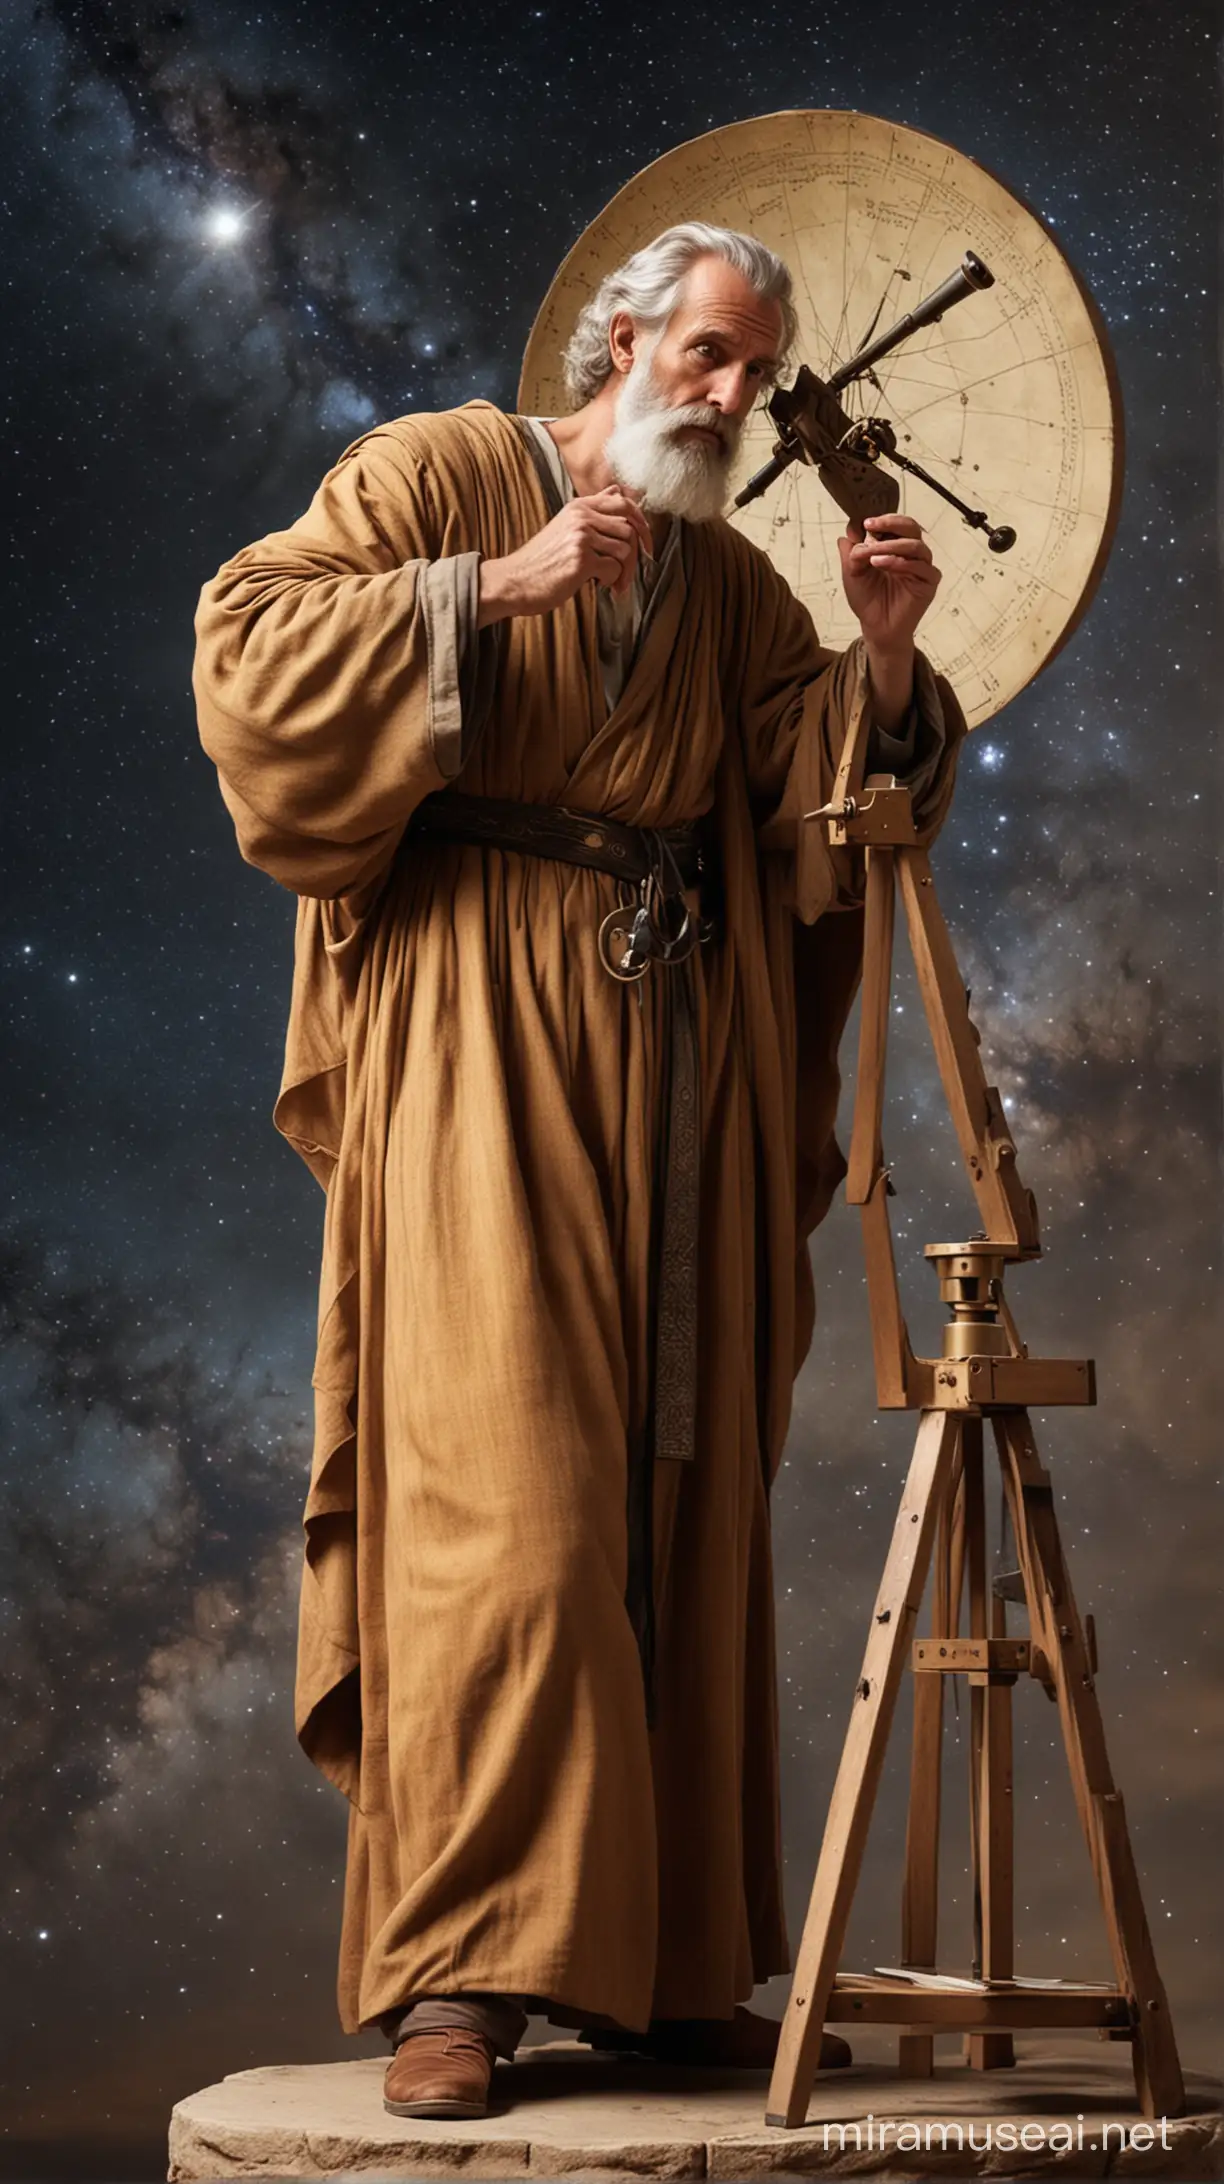 An ancient astronomer.